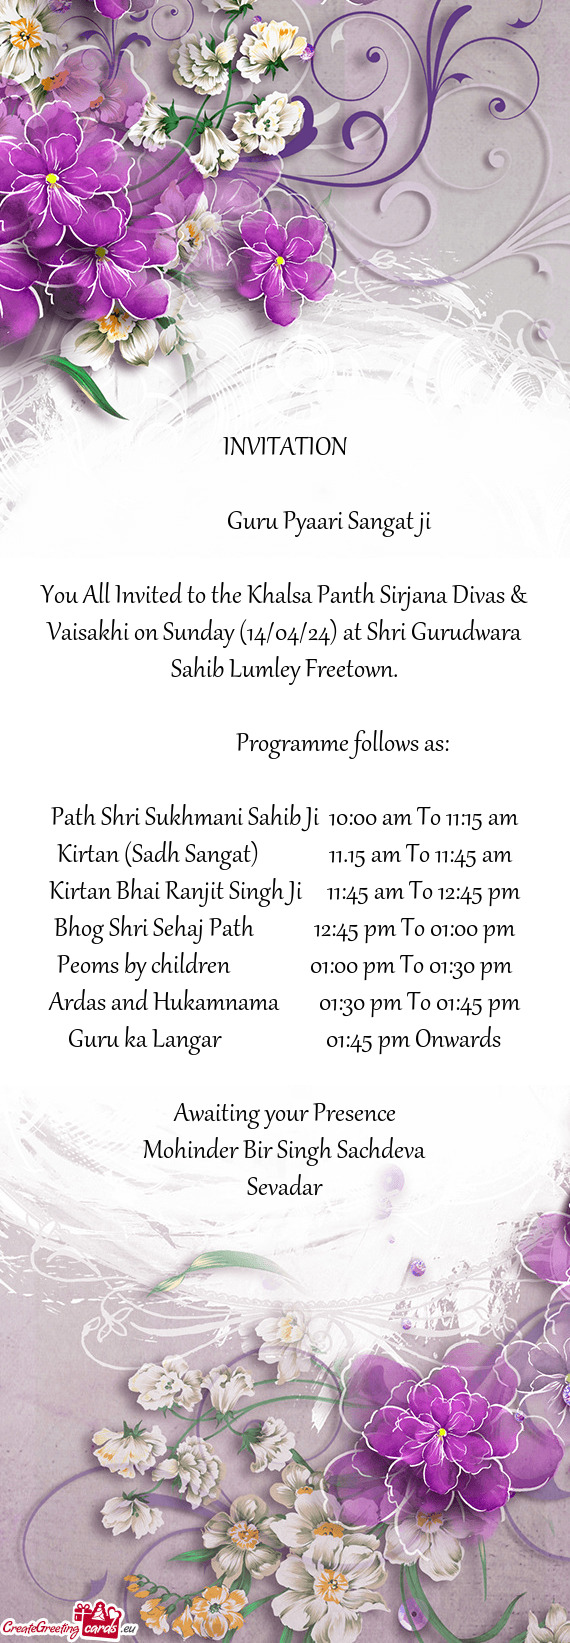 You All Invited to the Khalsa Panth Sirjana Divas & Vaisakhi on Sunday (14/04/24) at Shri Gurudwara